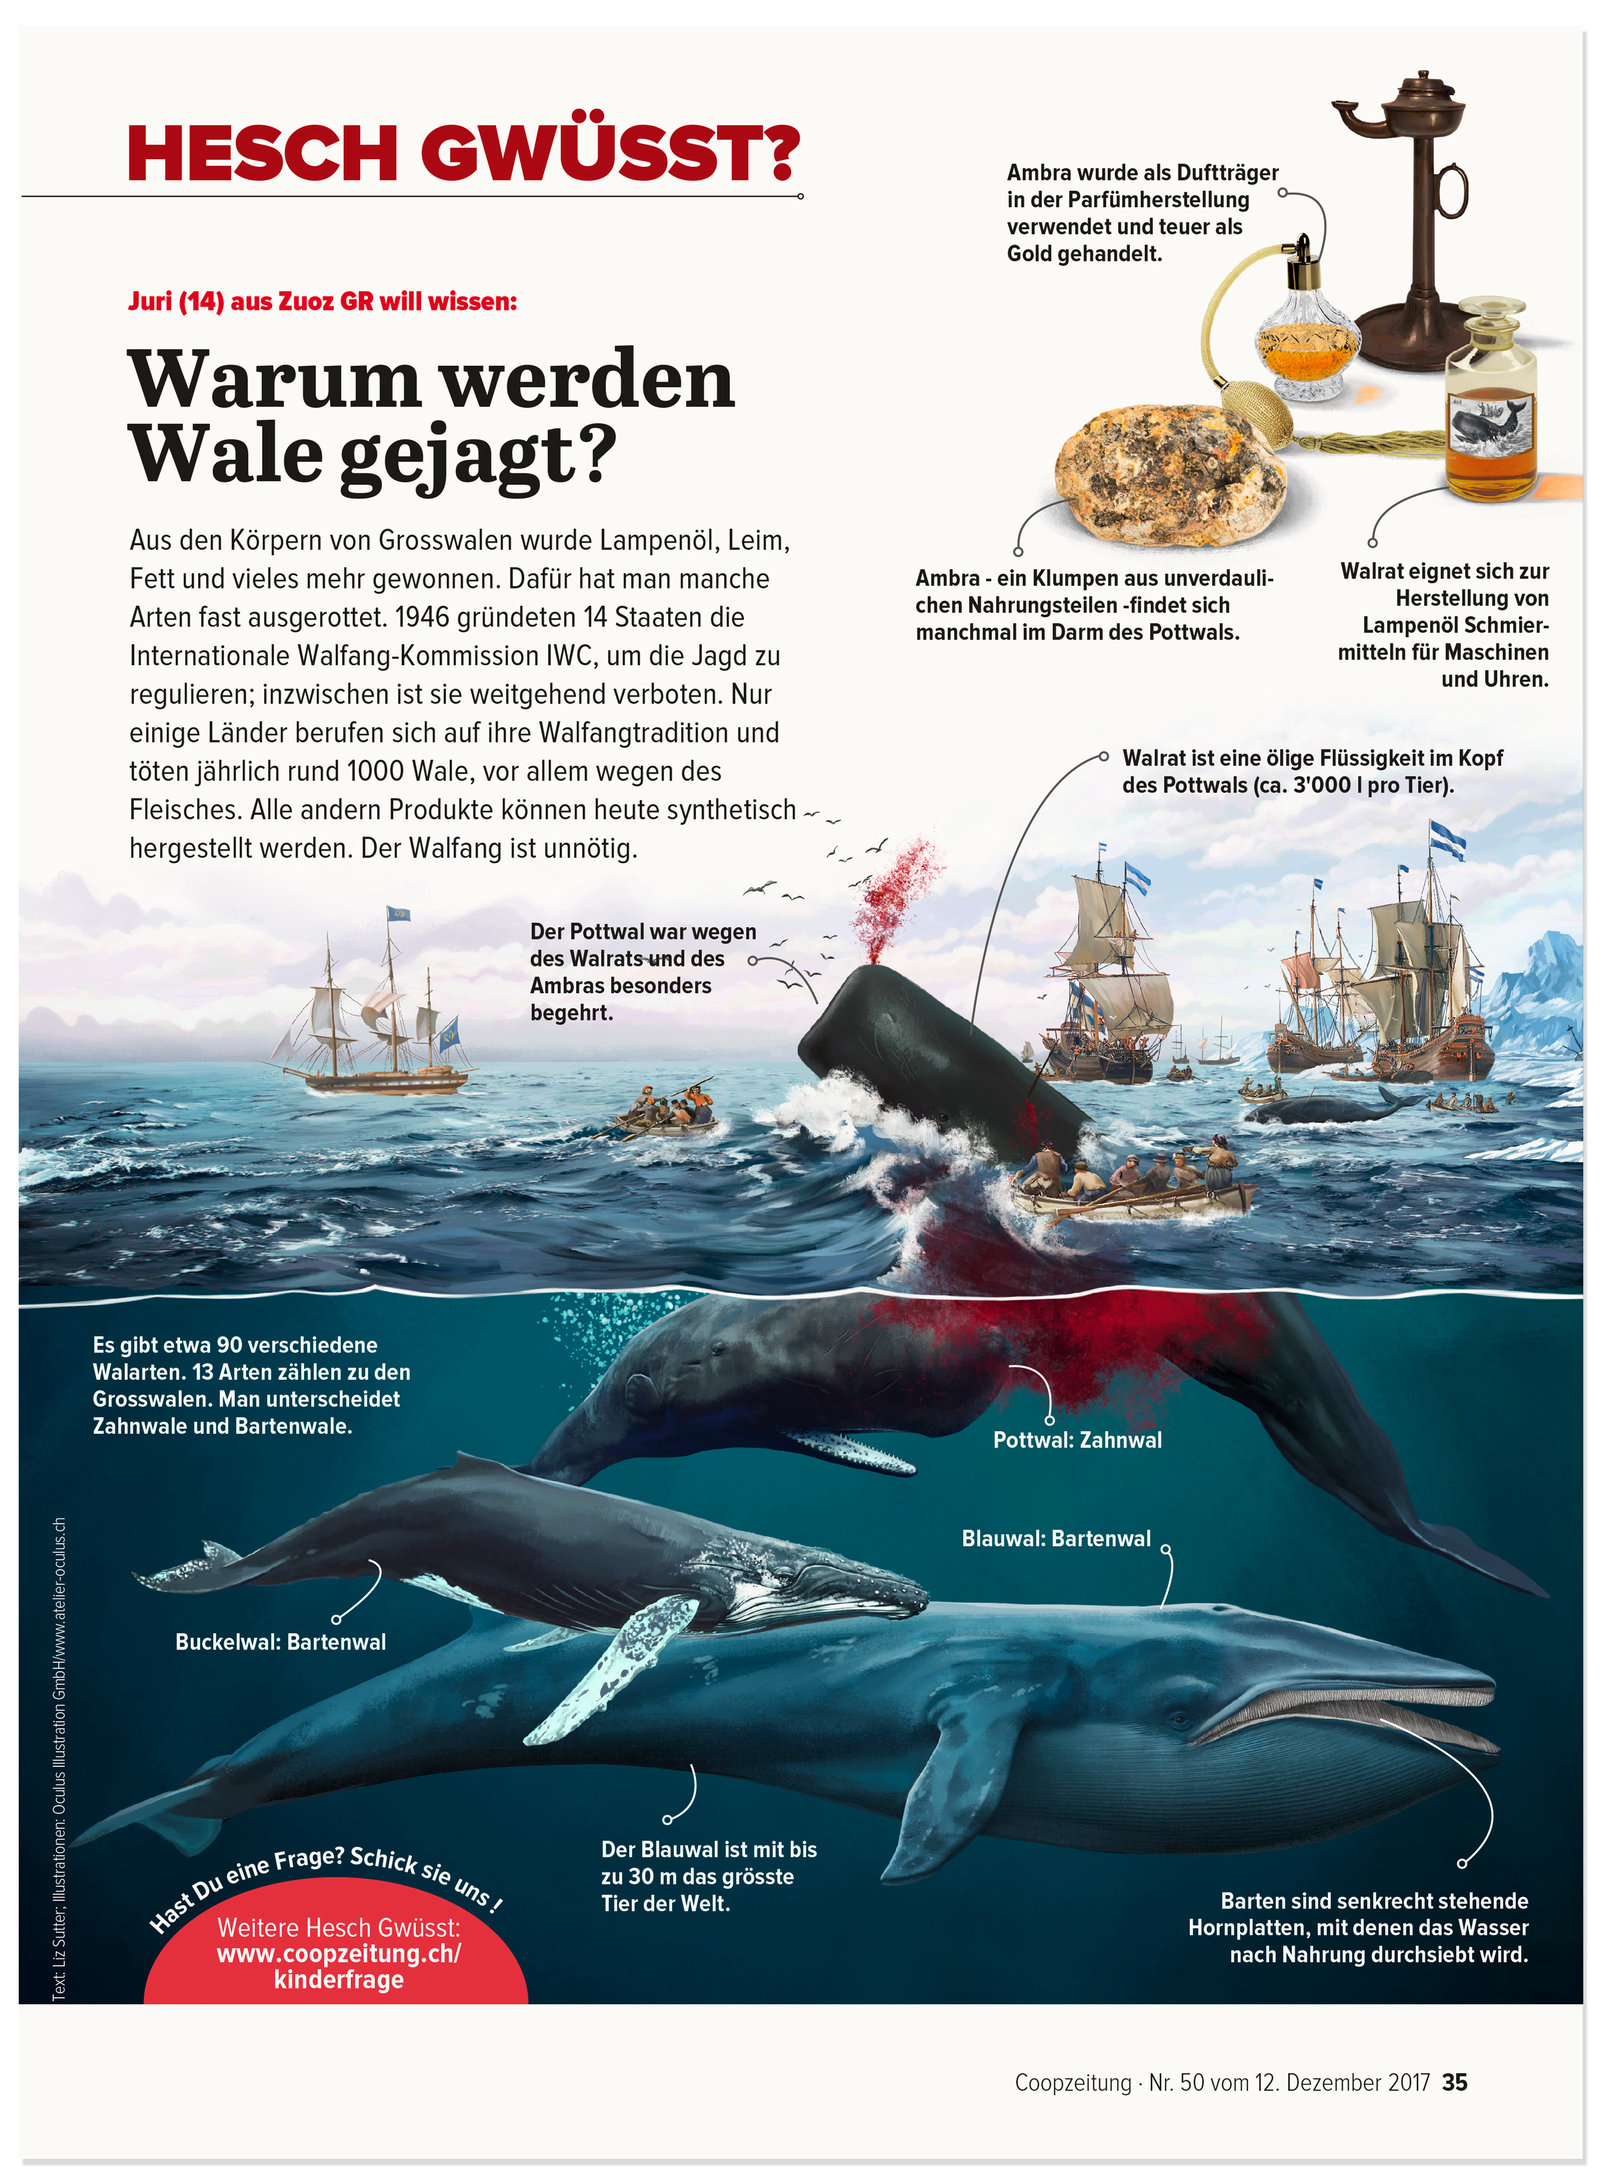 oculus-illustration-coopzeitung-hesch-gwuesst-waljagd